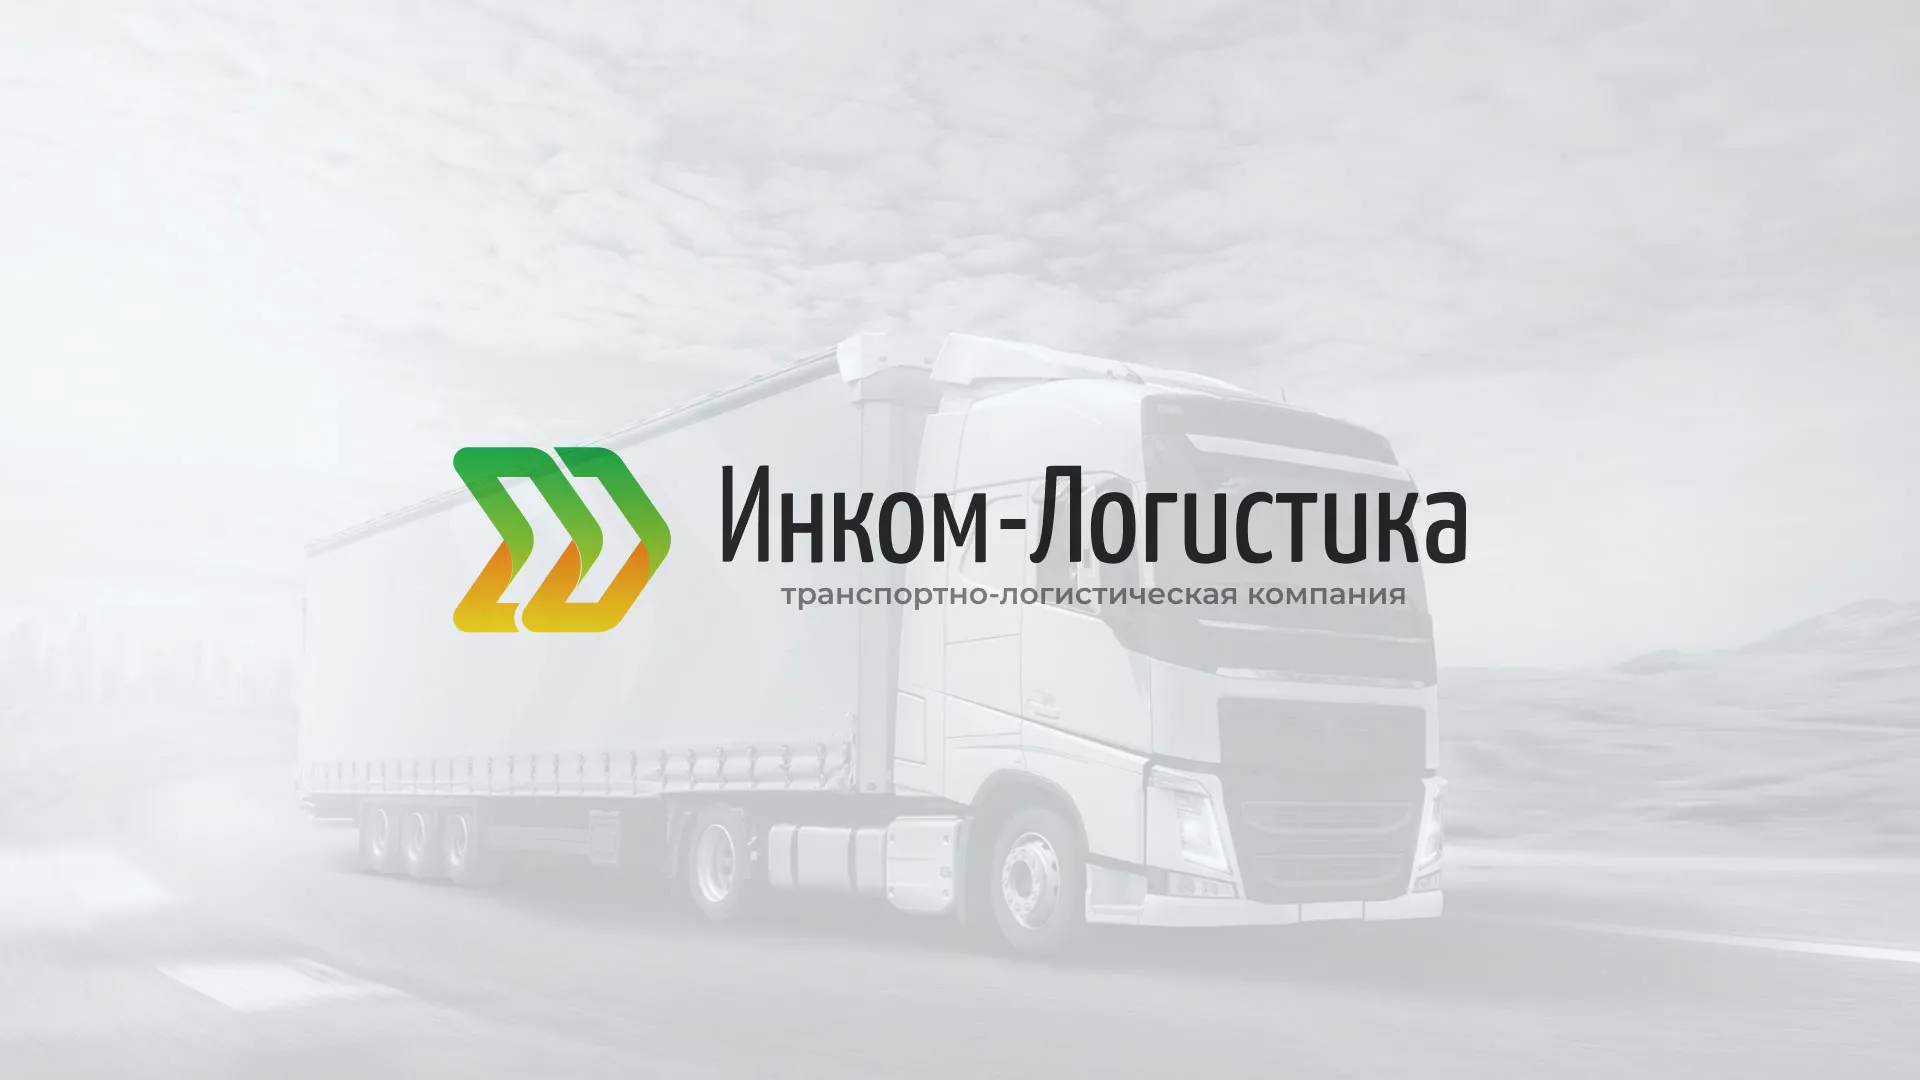 Разработка логотипа и сайта компании «Инком-Логистика» в Волосово